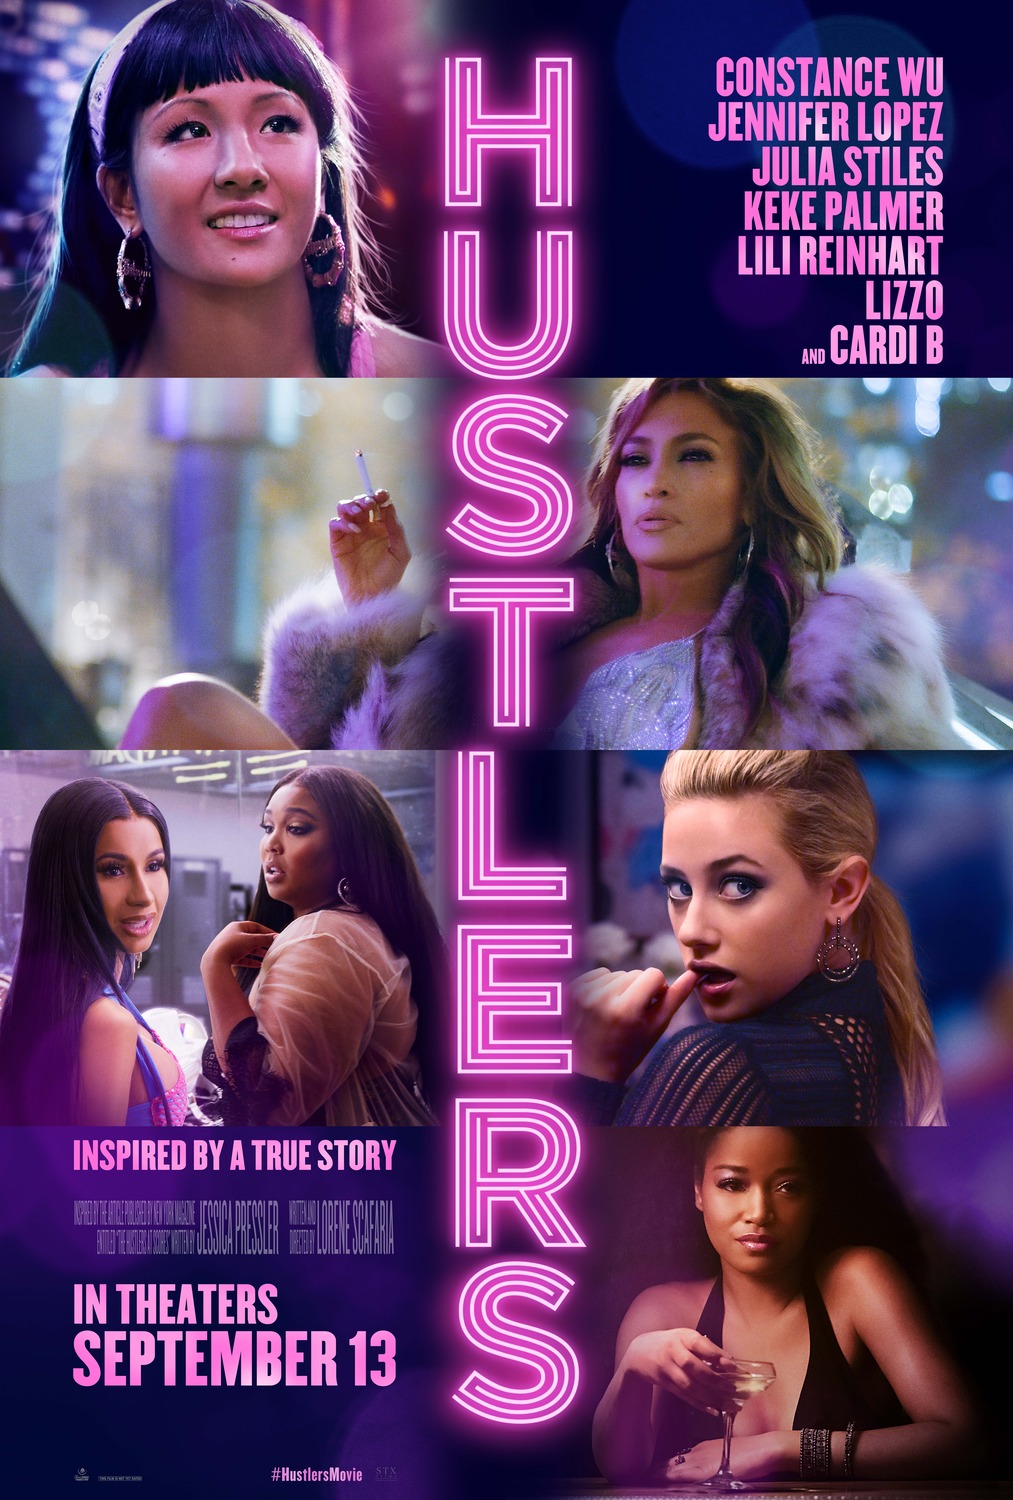 Promotional poster for HUSTLERS.